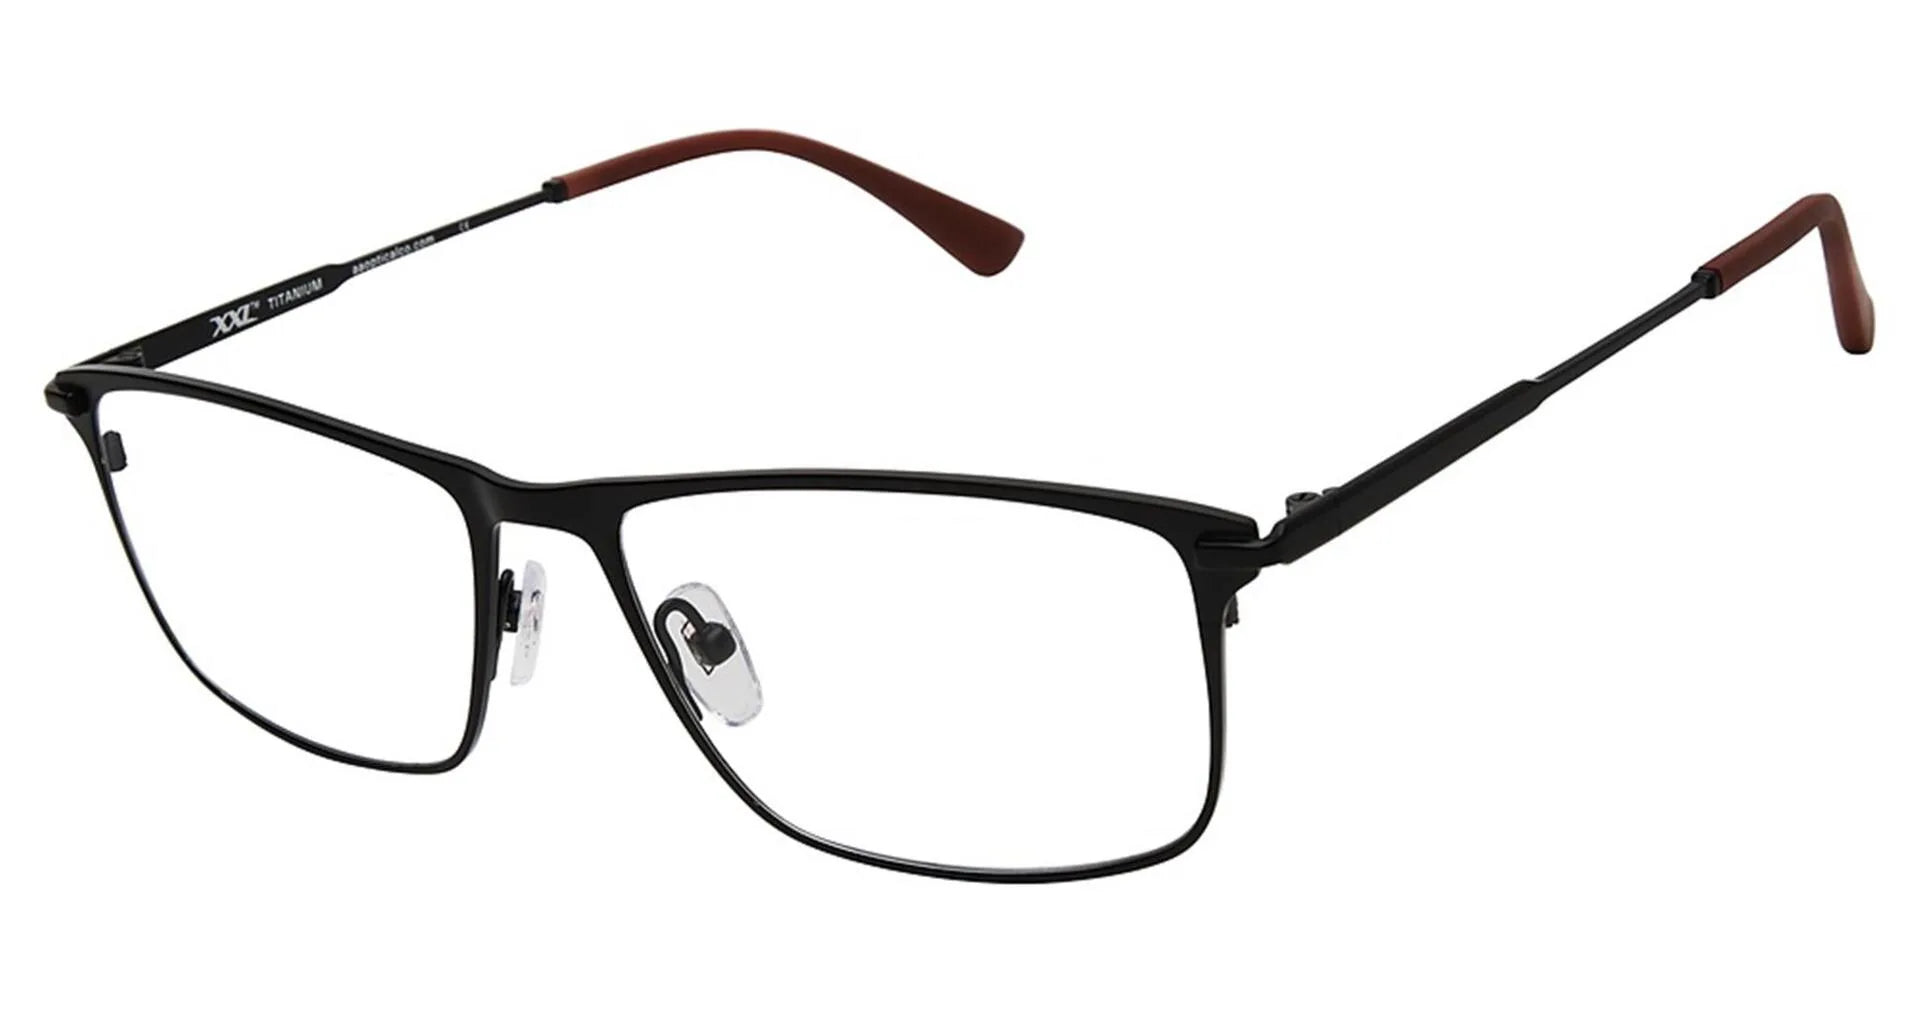 XXL Eyewear Stag Eyeglasses Black